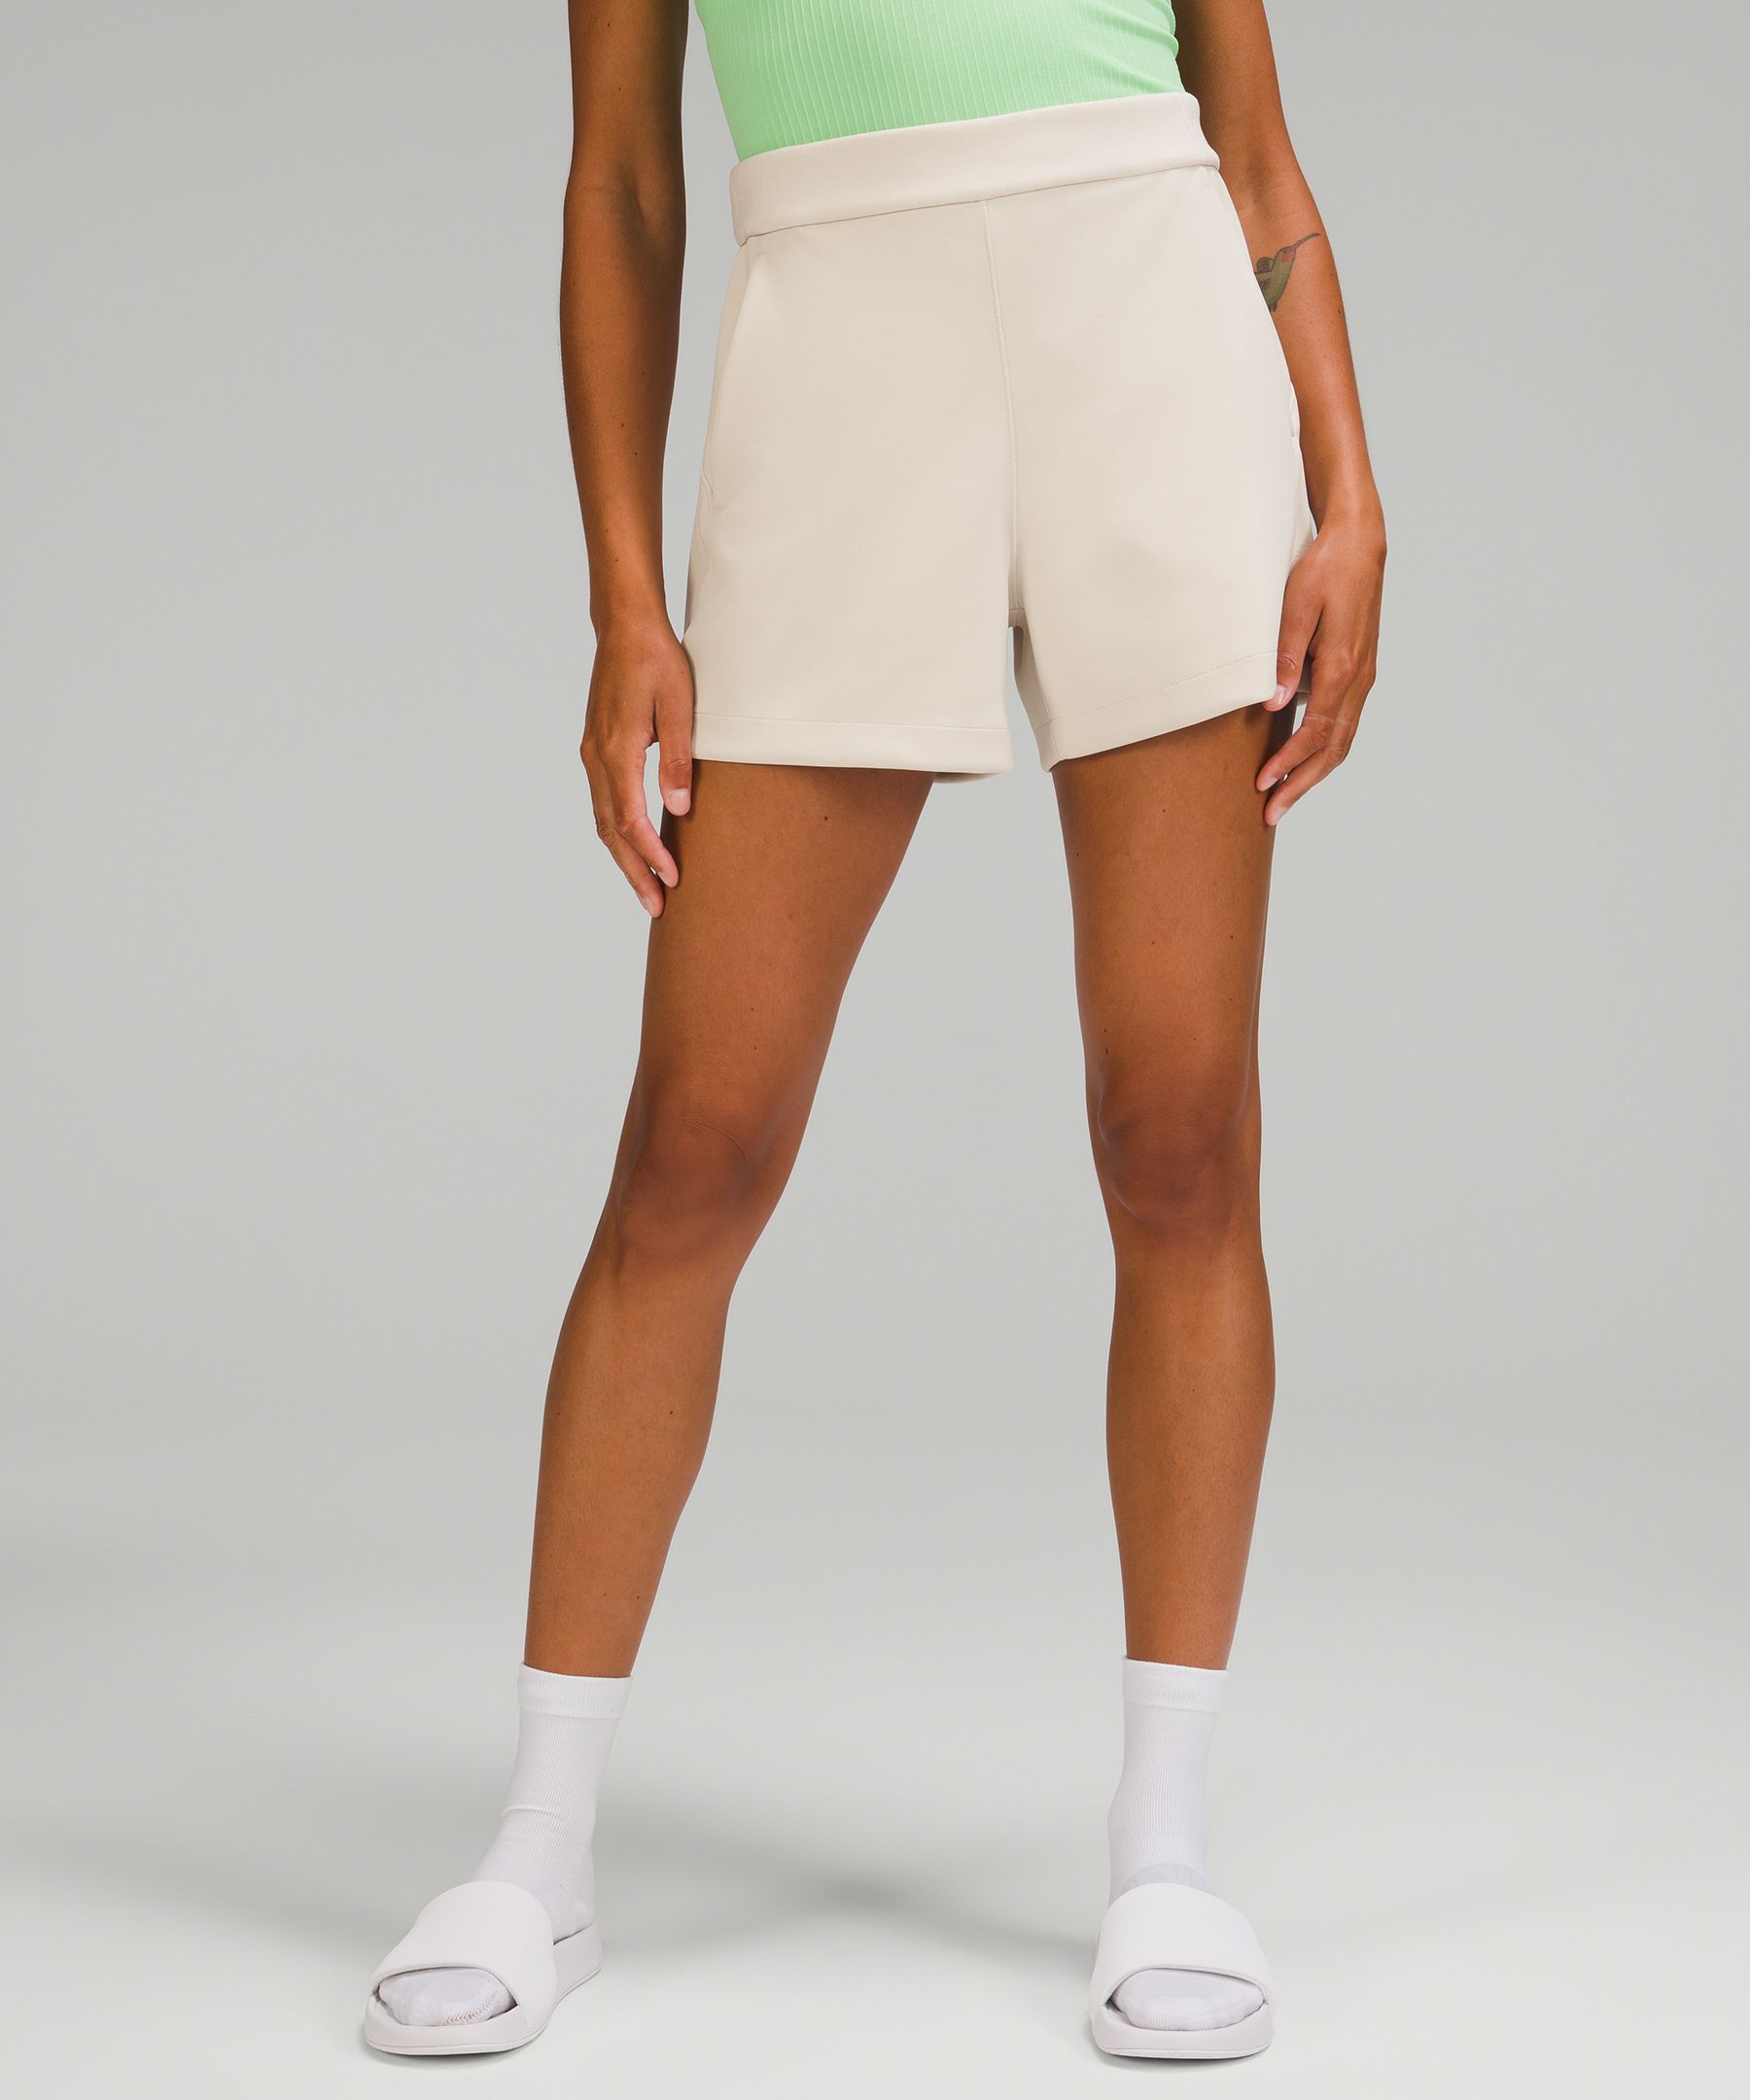 Lululemon Softstreme Sweatshirt Pants Shorts Review